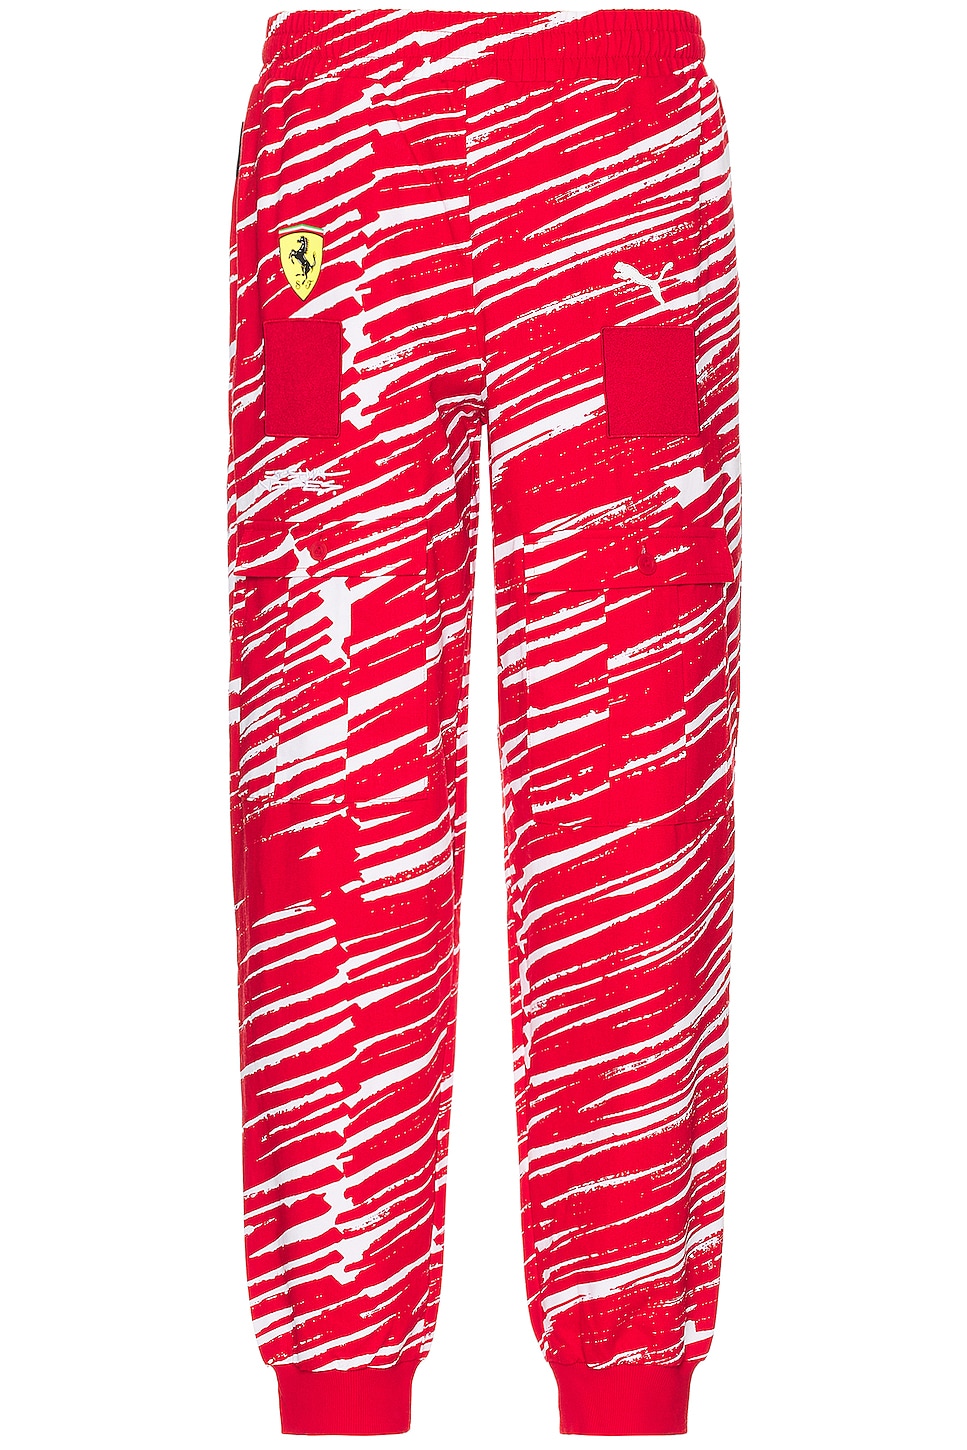 Ferrari x Joshua Vides Race Pants in Red